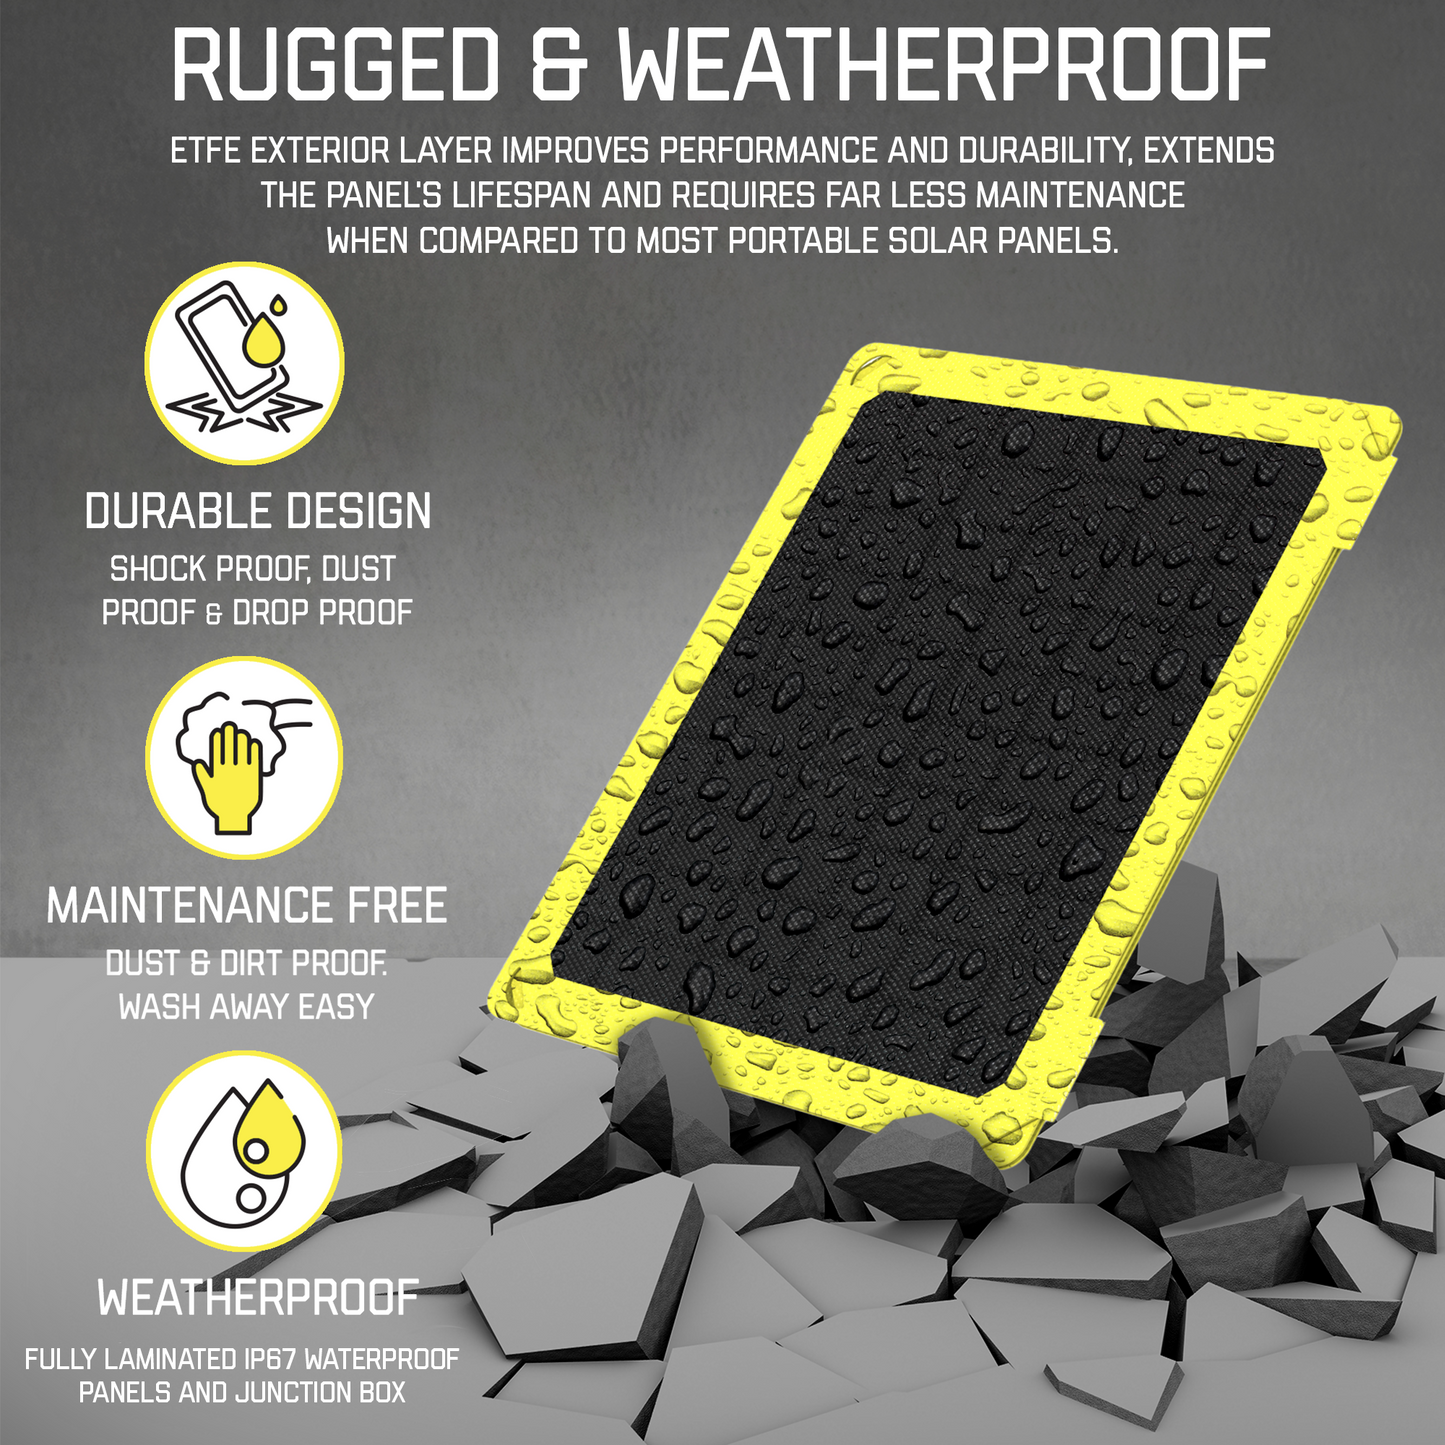 SunJack 60 Watt Foldable ETFE Monocrystalline Solar Panel Charger with 100W 25600mAh Power Bank